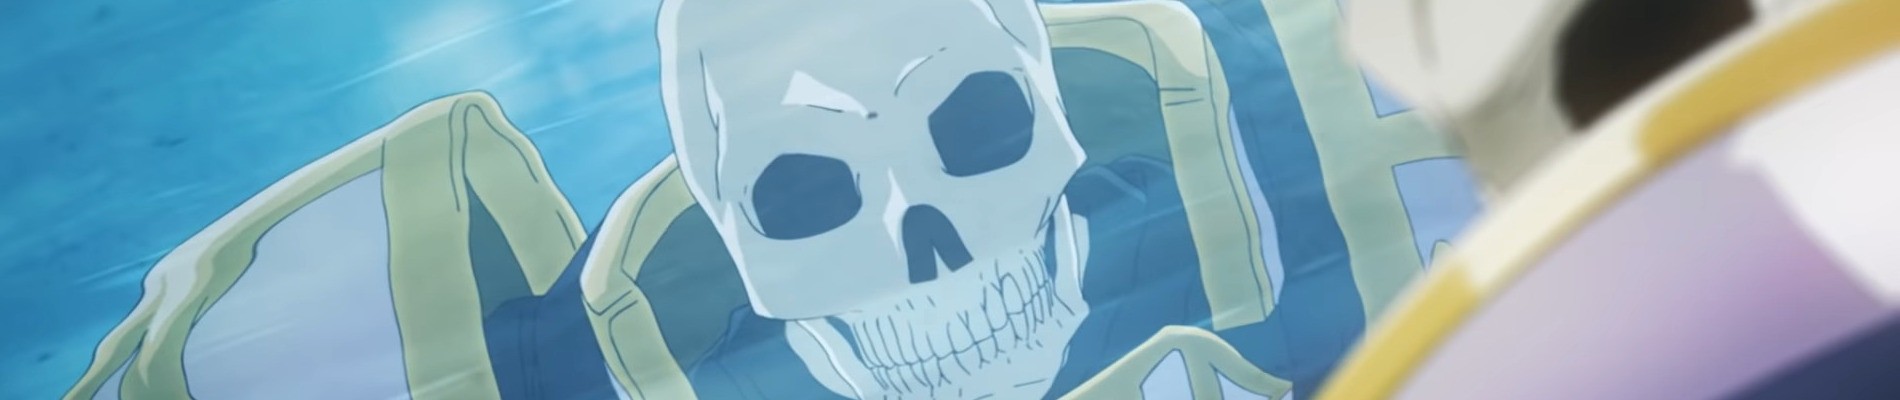 Skeleton Knight in Another World TRAILER 3 ANIME (Gaikotsu Kishi-sama,  Tadaima Isekai e Odekakechuu) 